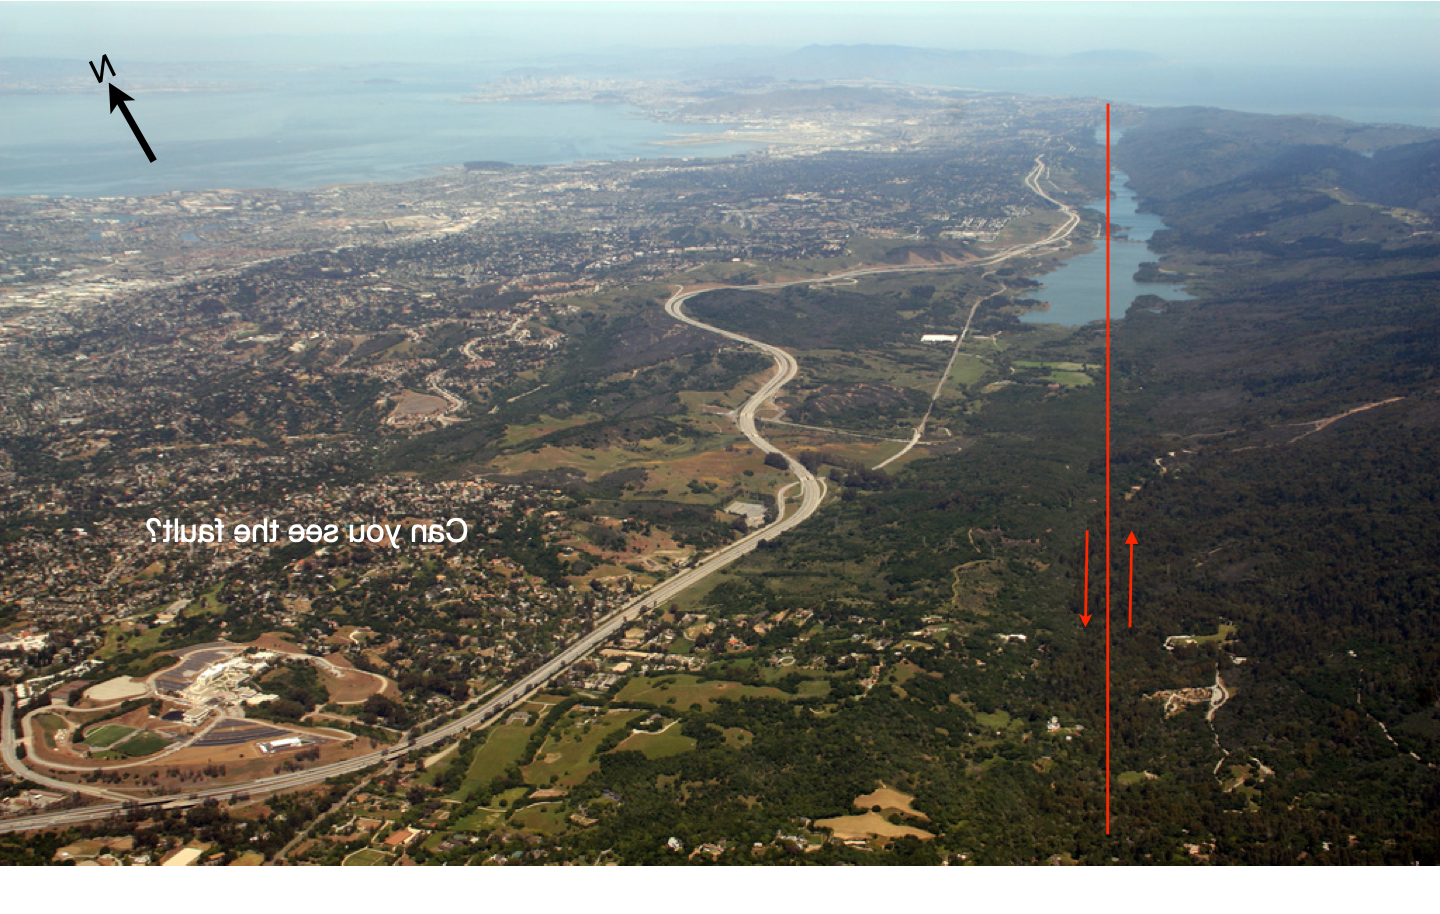 San Andreas fault photo